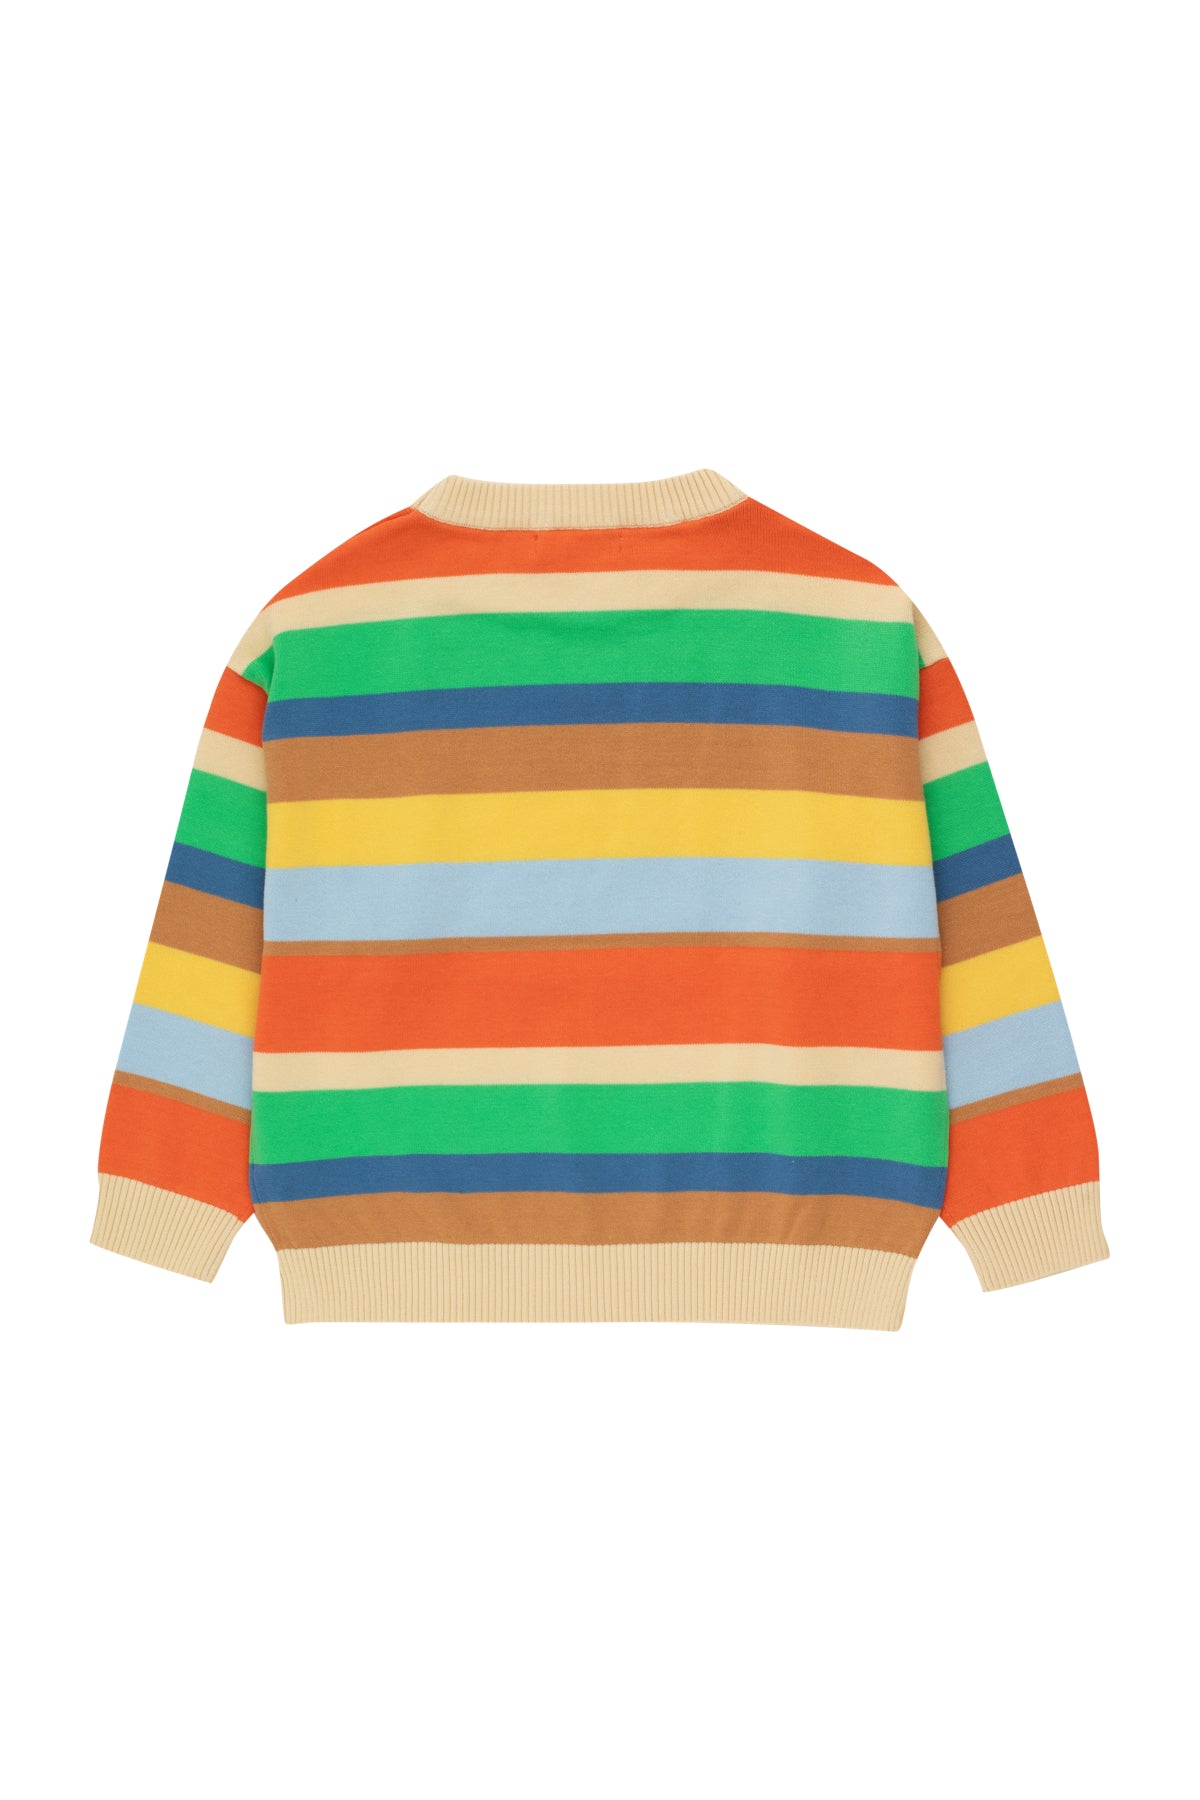 retro stripes sweater